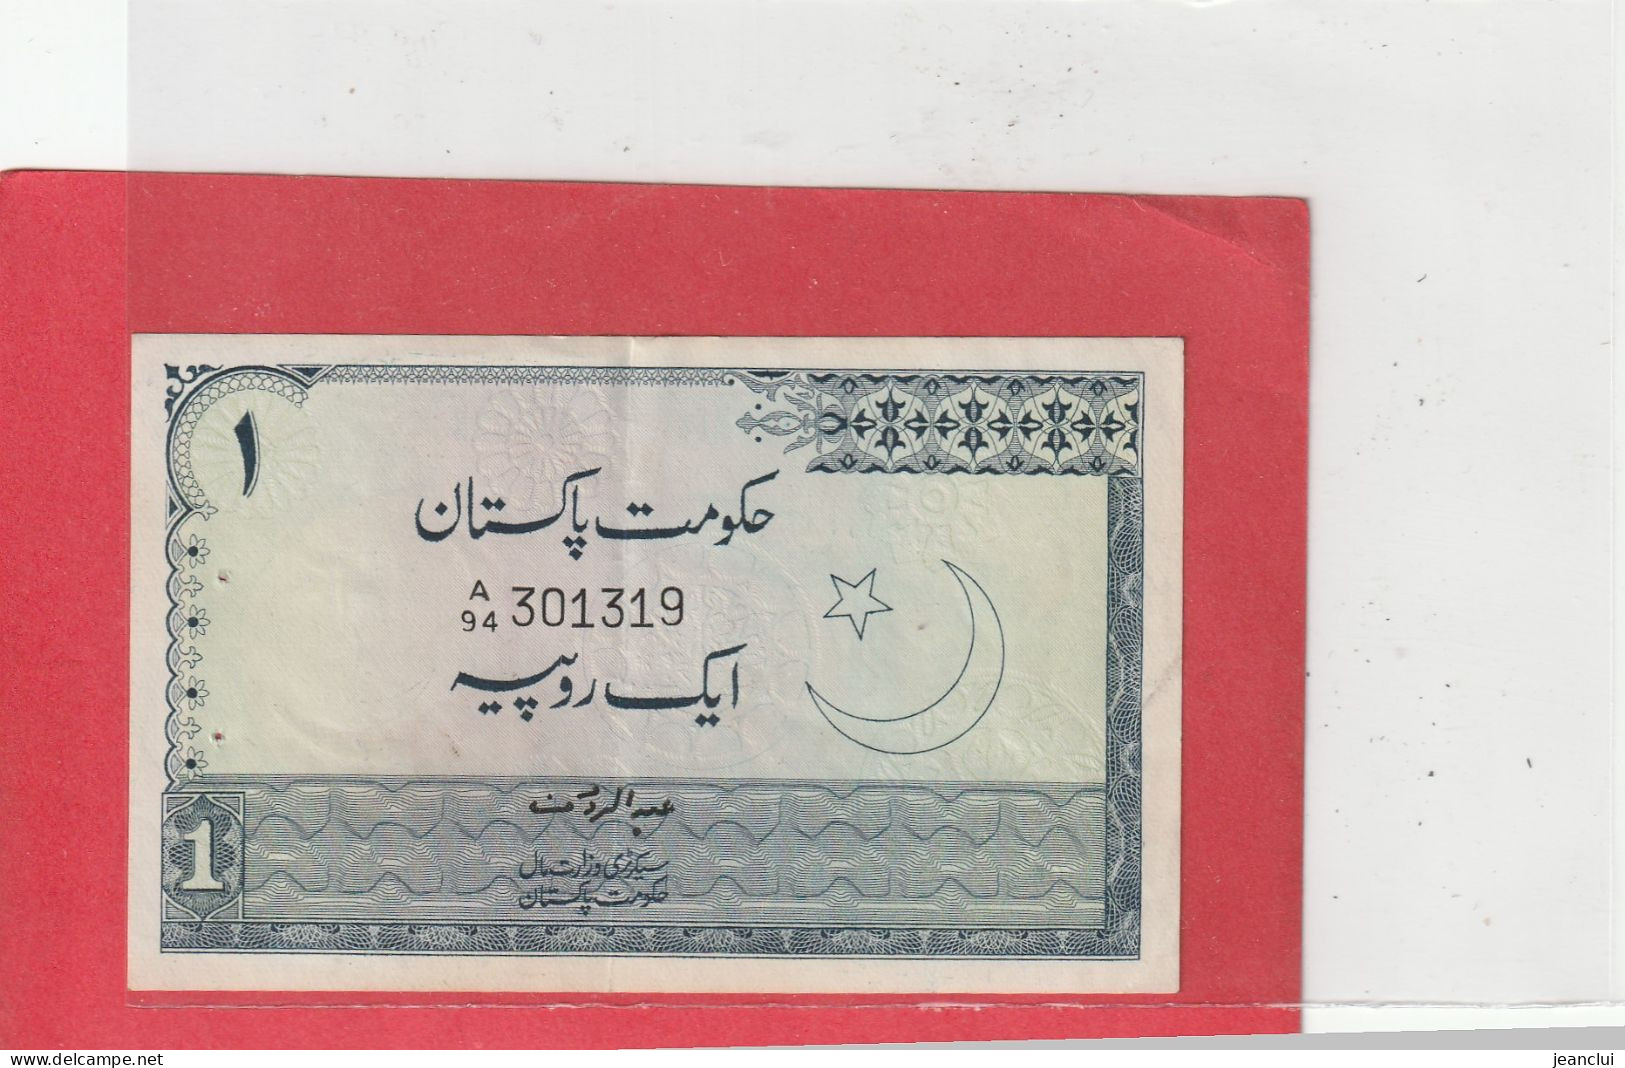 GOVERNMENT OF PAKISTAN . 1 RUPEE .  N D ( 1975-81 ).  N° A/94 301319  .  2 SCANNES - Pakistán